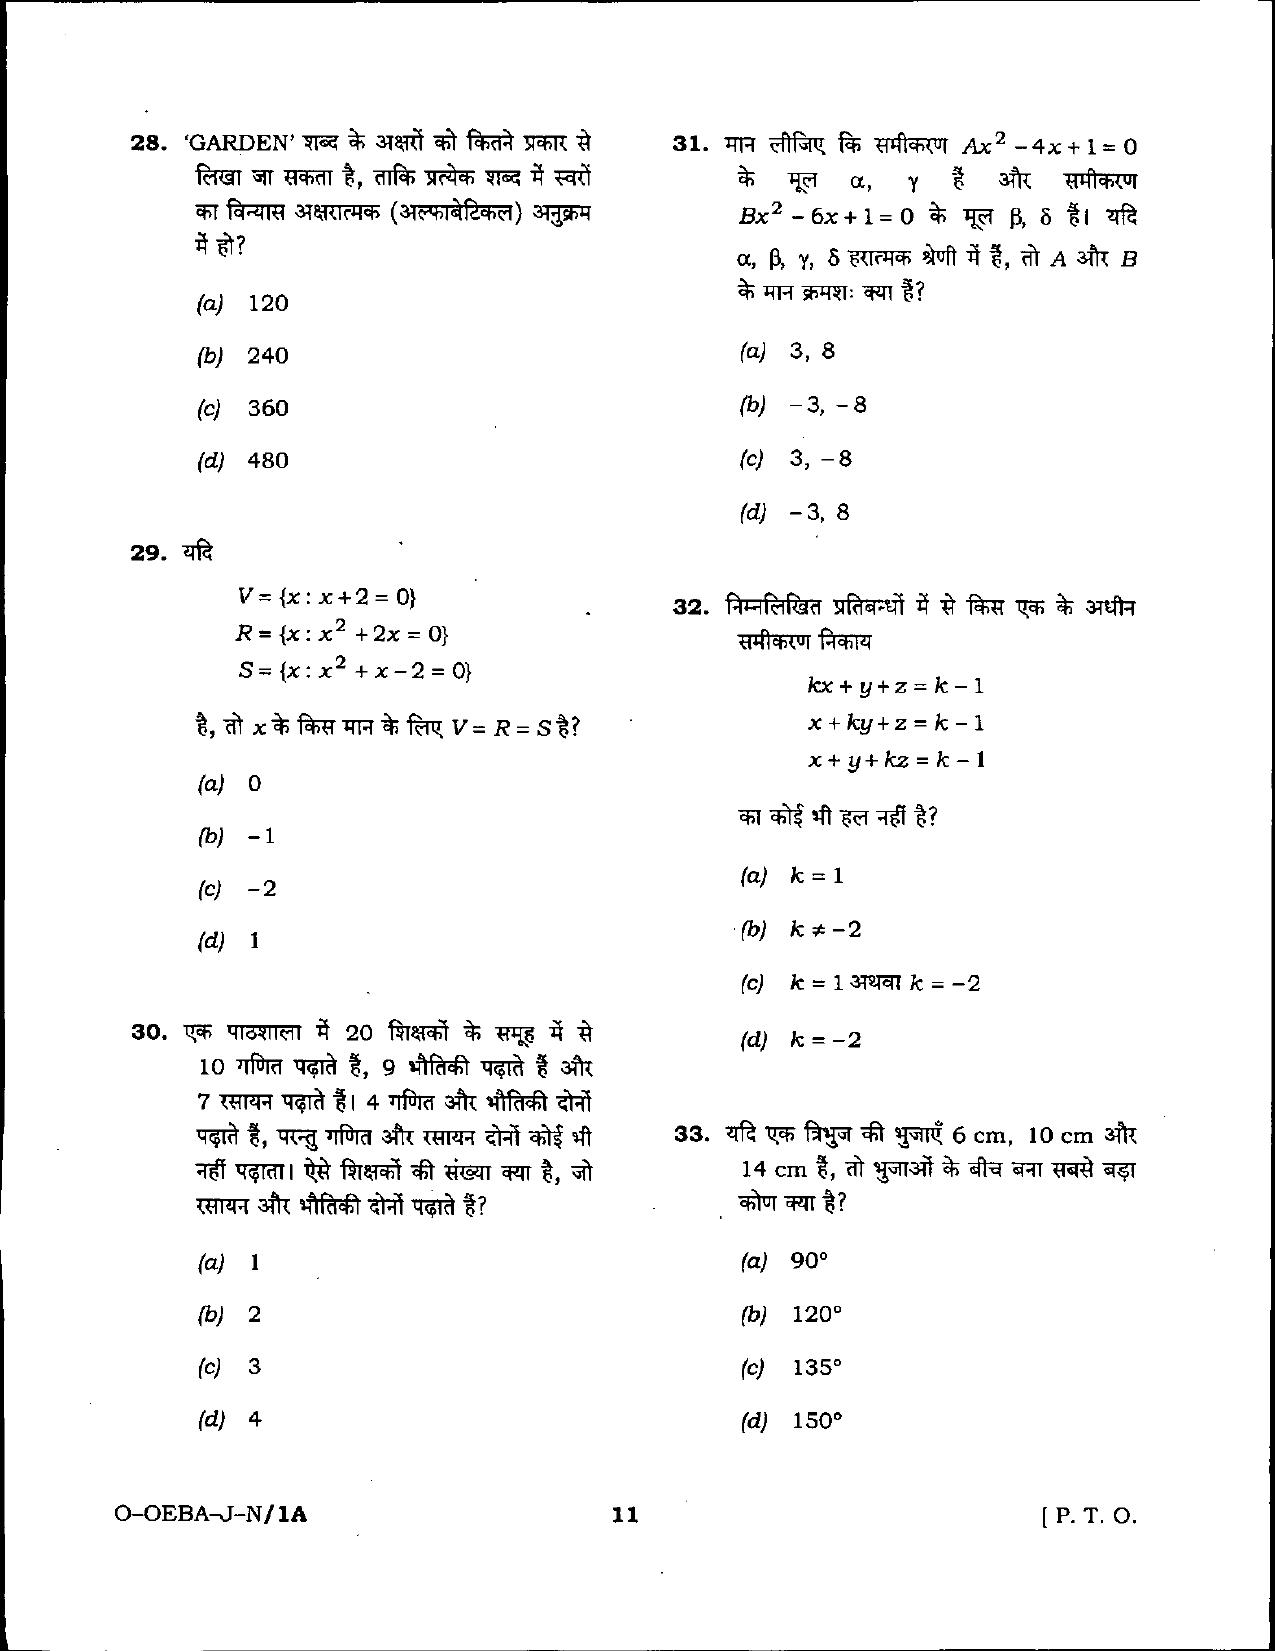 Odisha Junior Clerk Question Paper - General Mathematics - Page 11